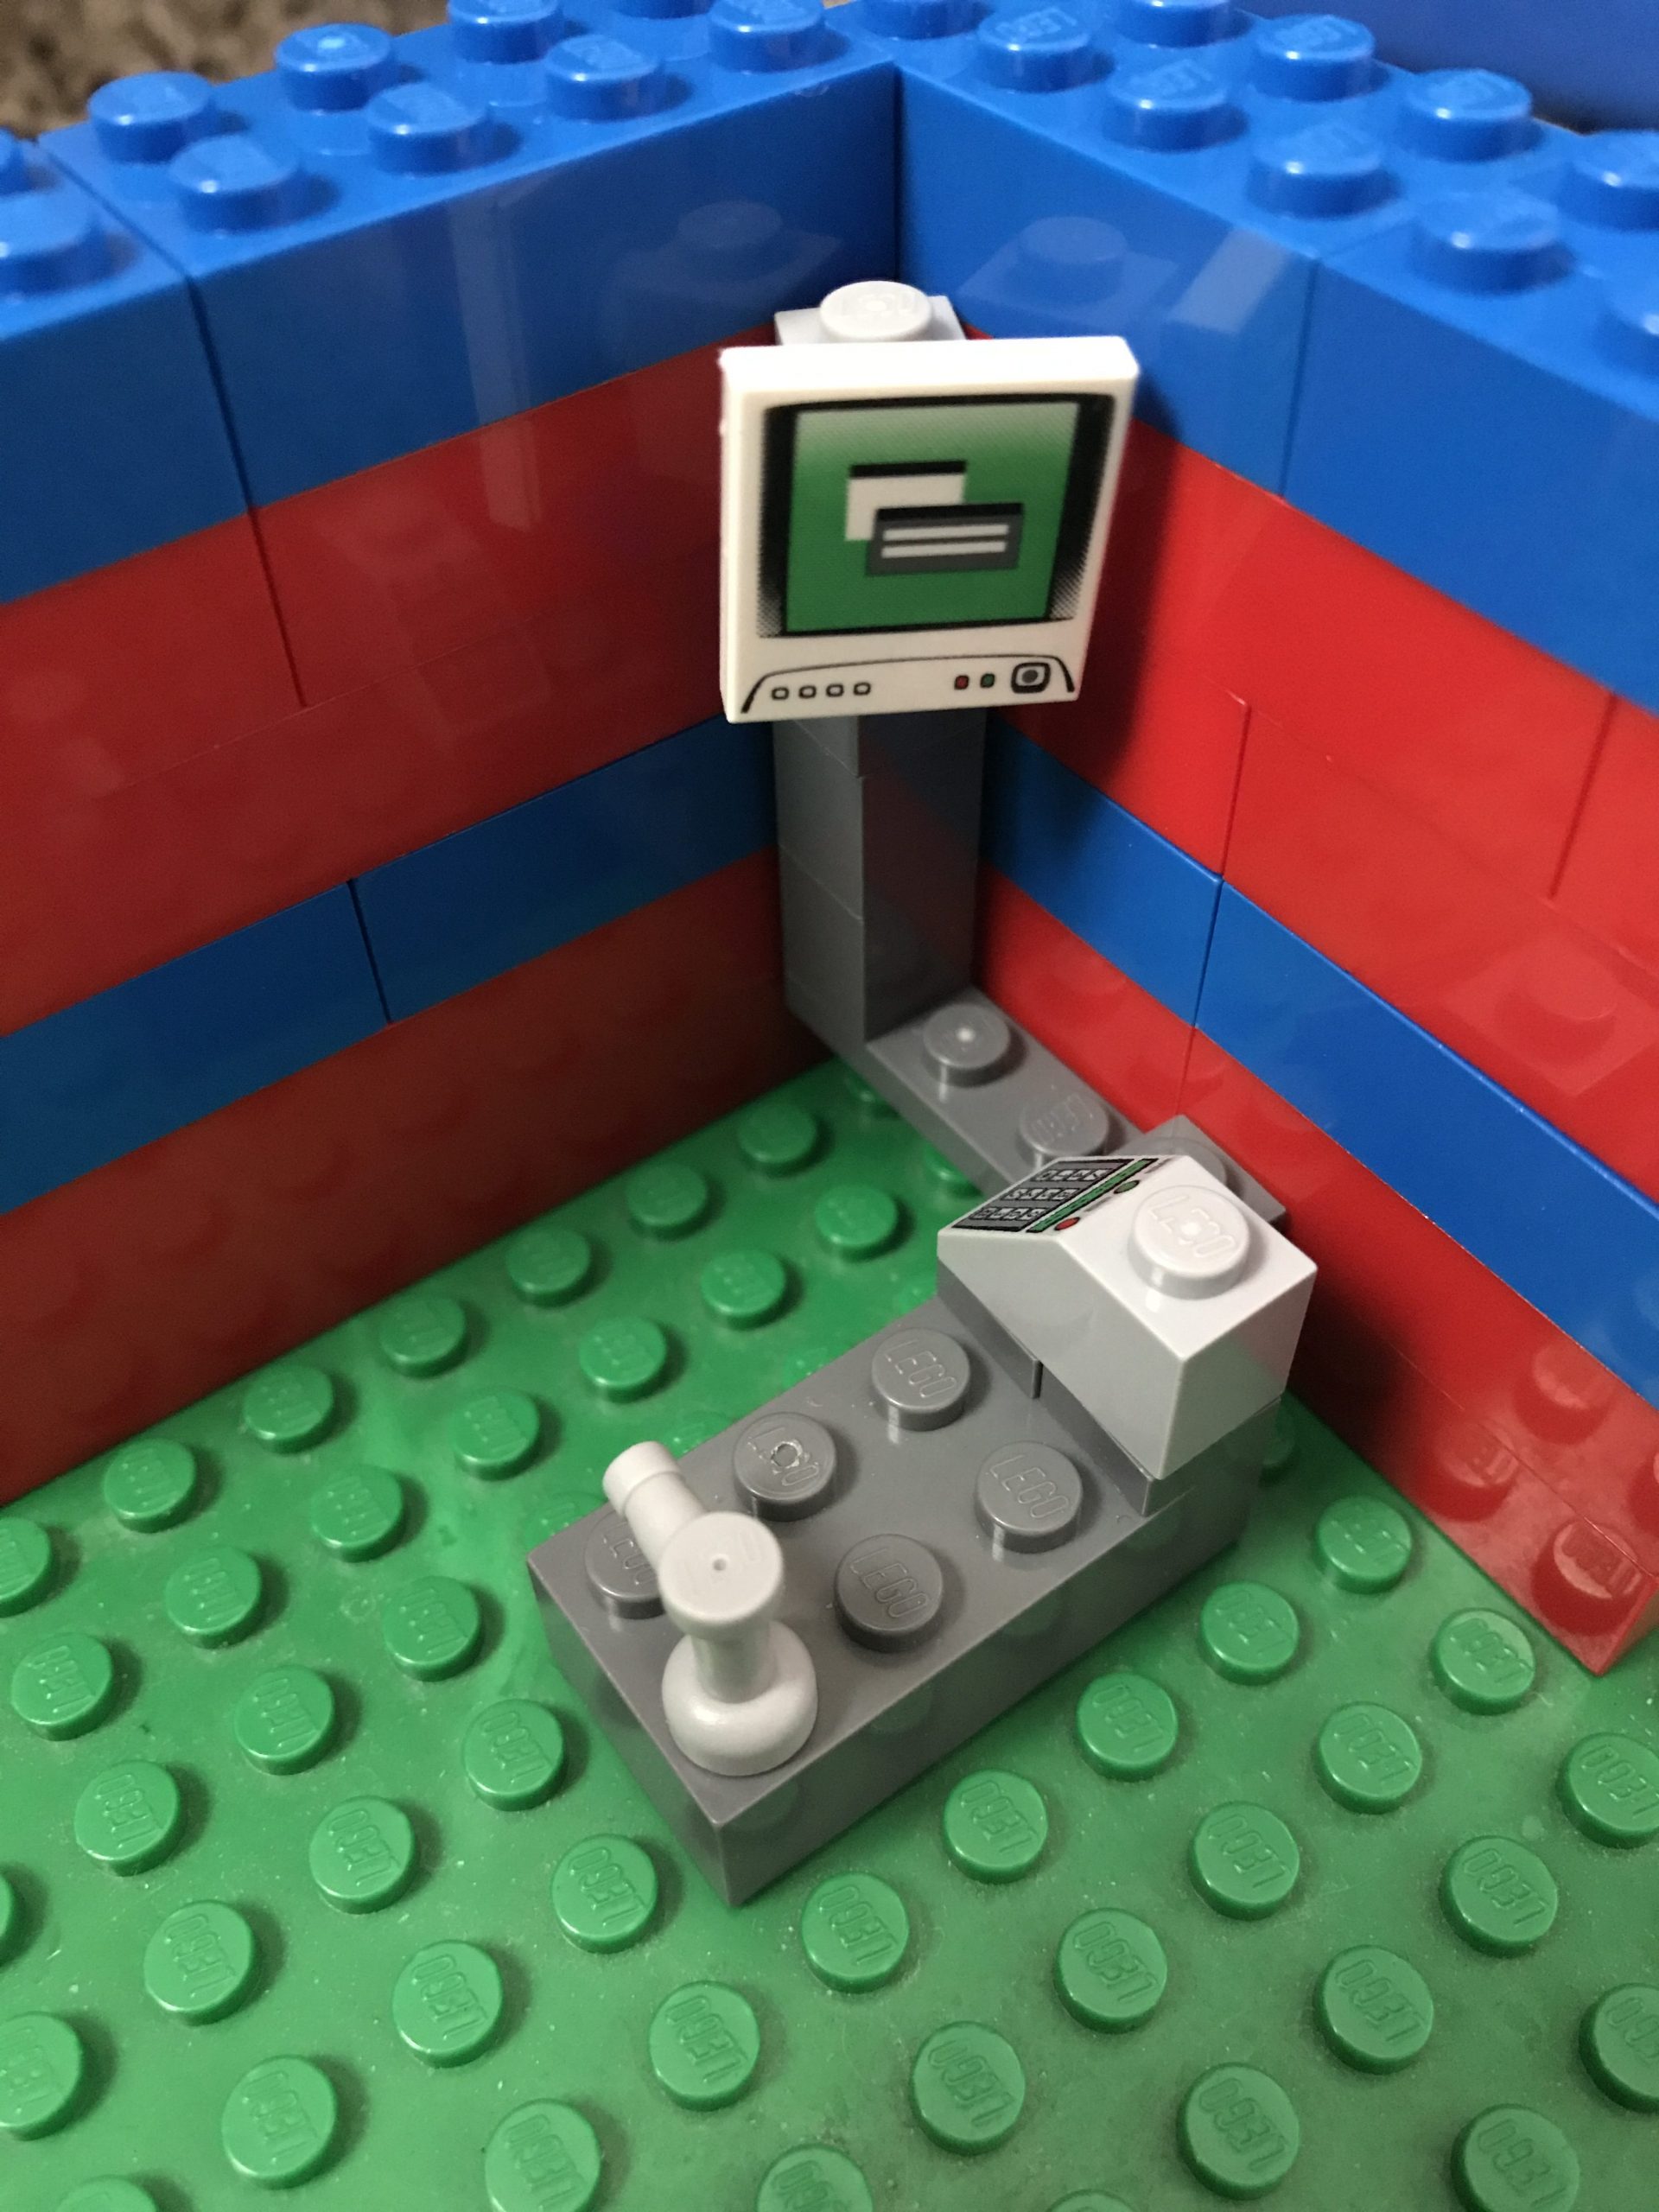 Lego Store Checkout Station